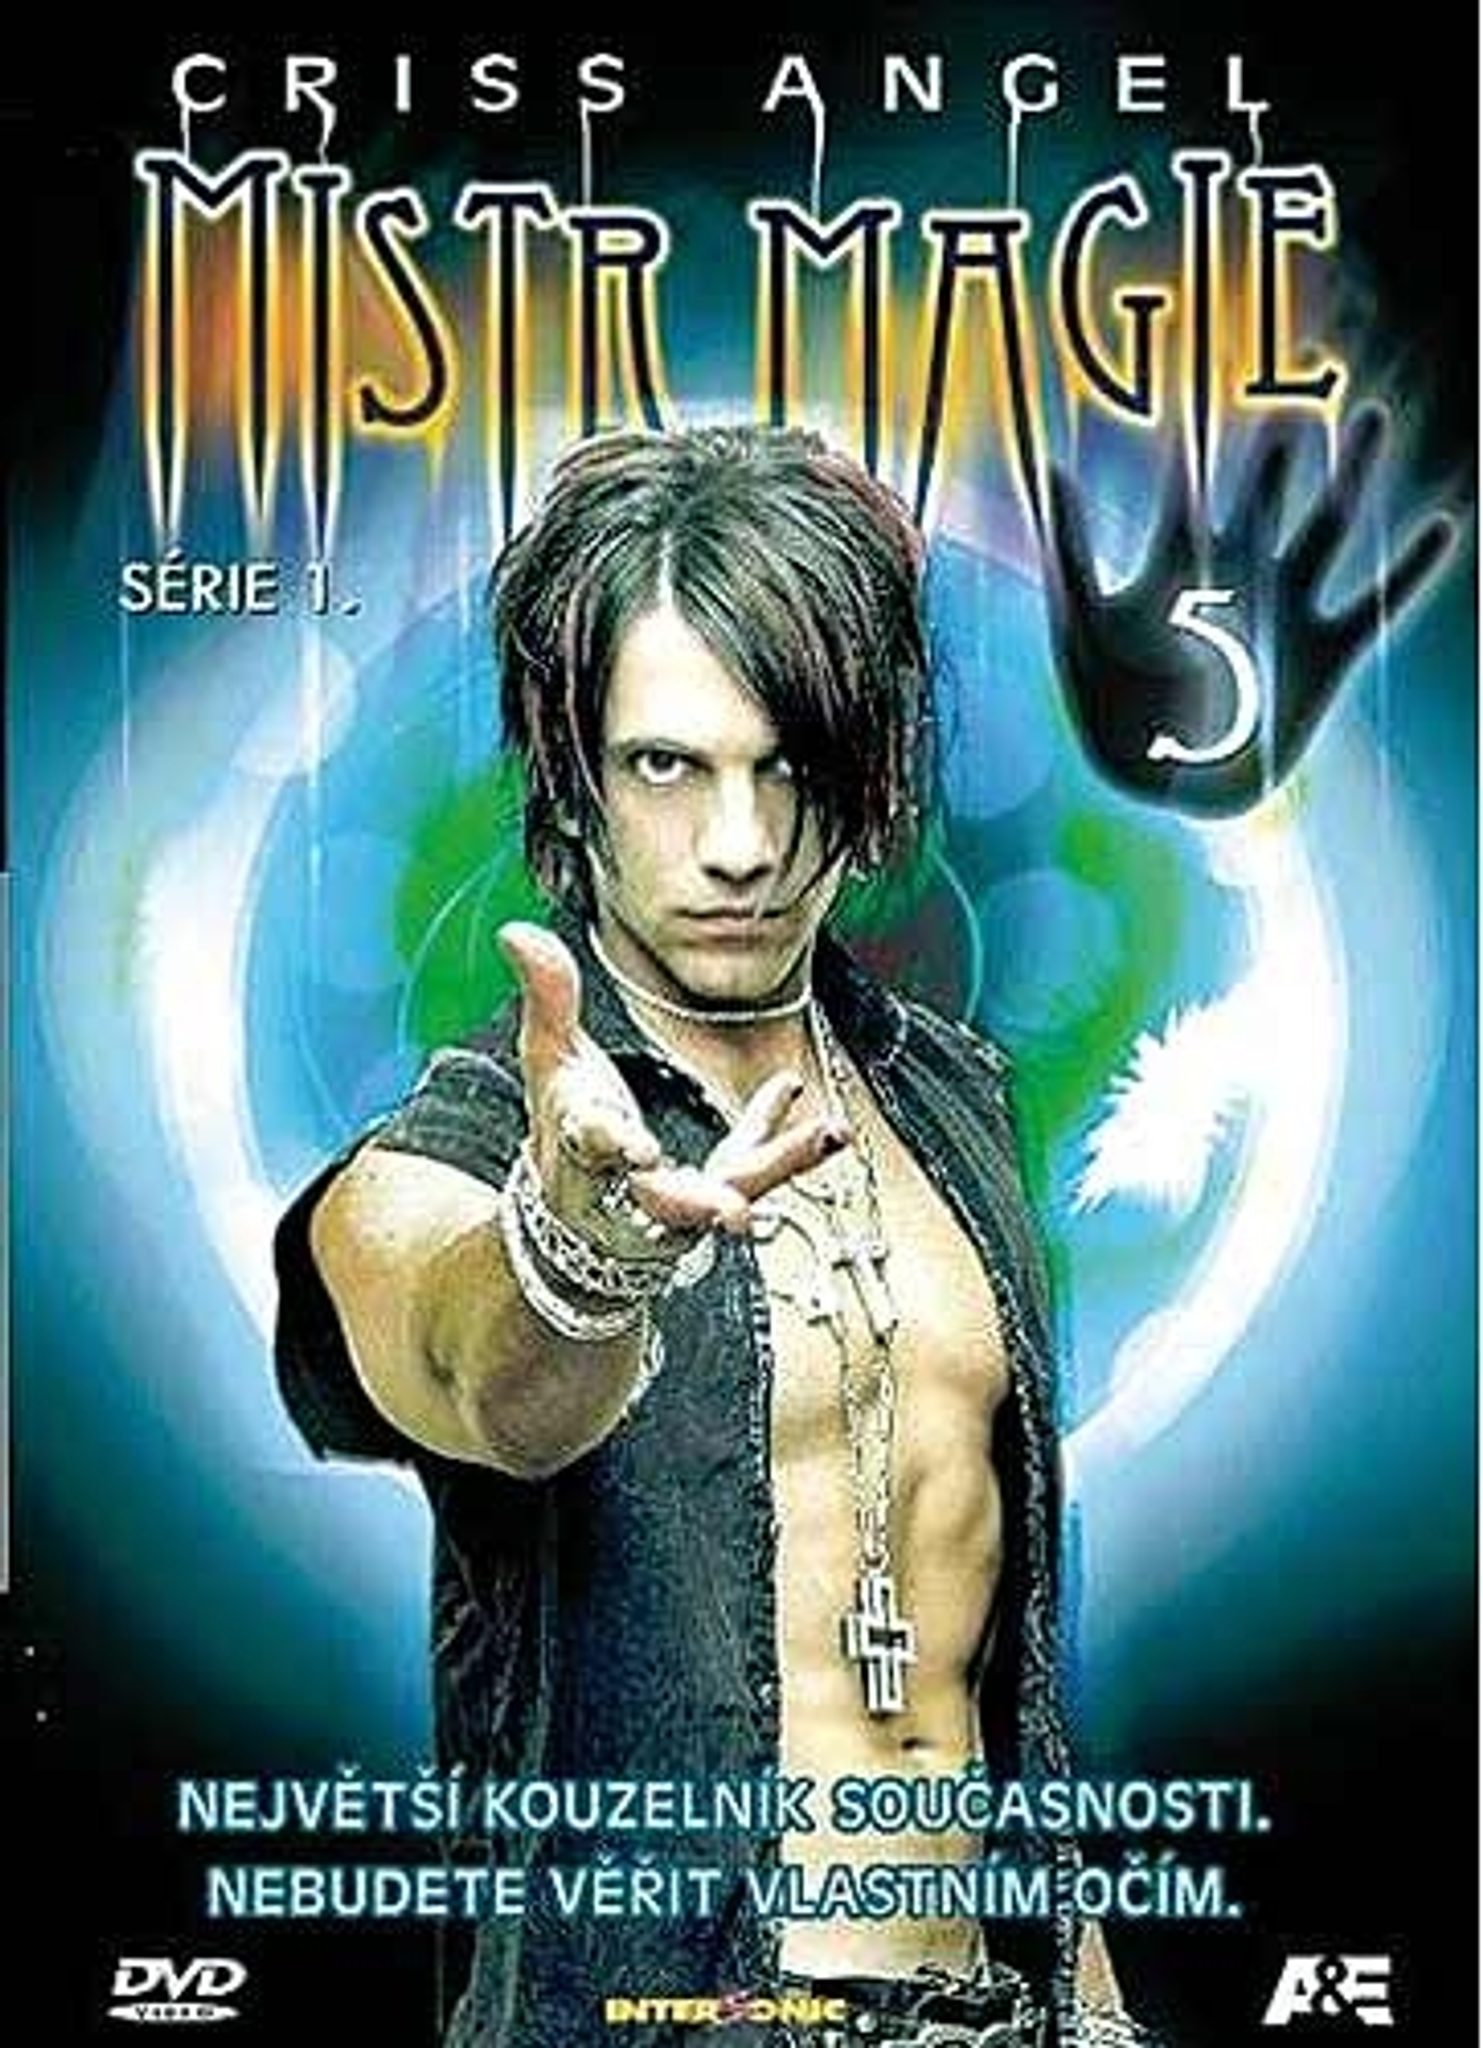 DVD Criss Angel Mistr magie srie 1 5 - Kliknutm na obrzek zavete